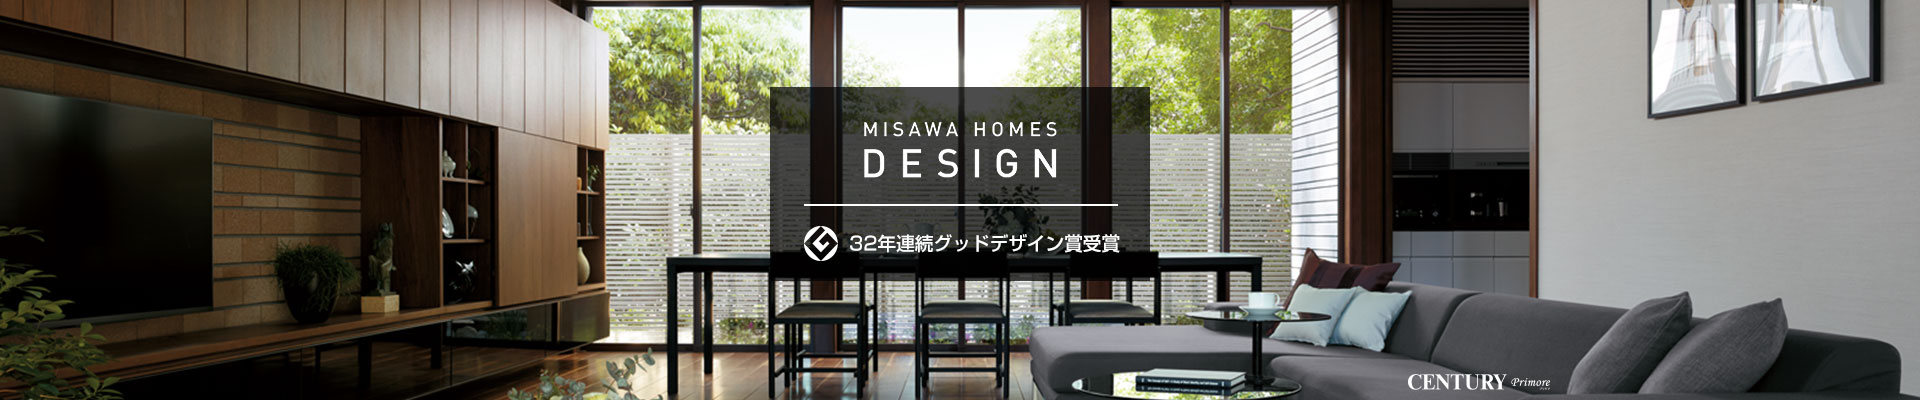 MISAWA HOMES DESIGN グッドデザイン賞連続受賞